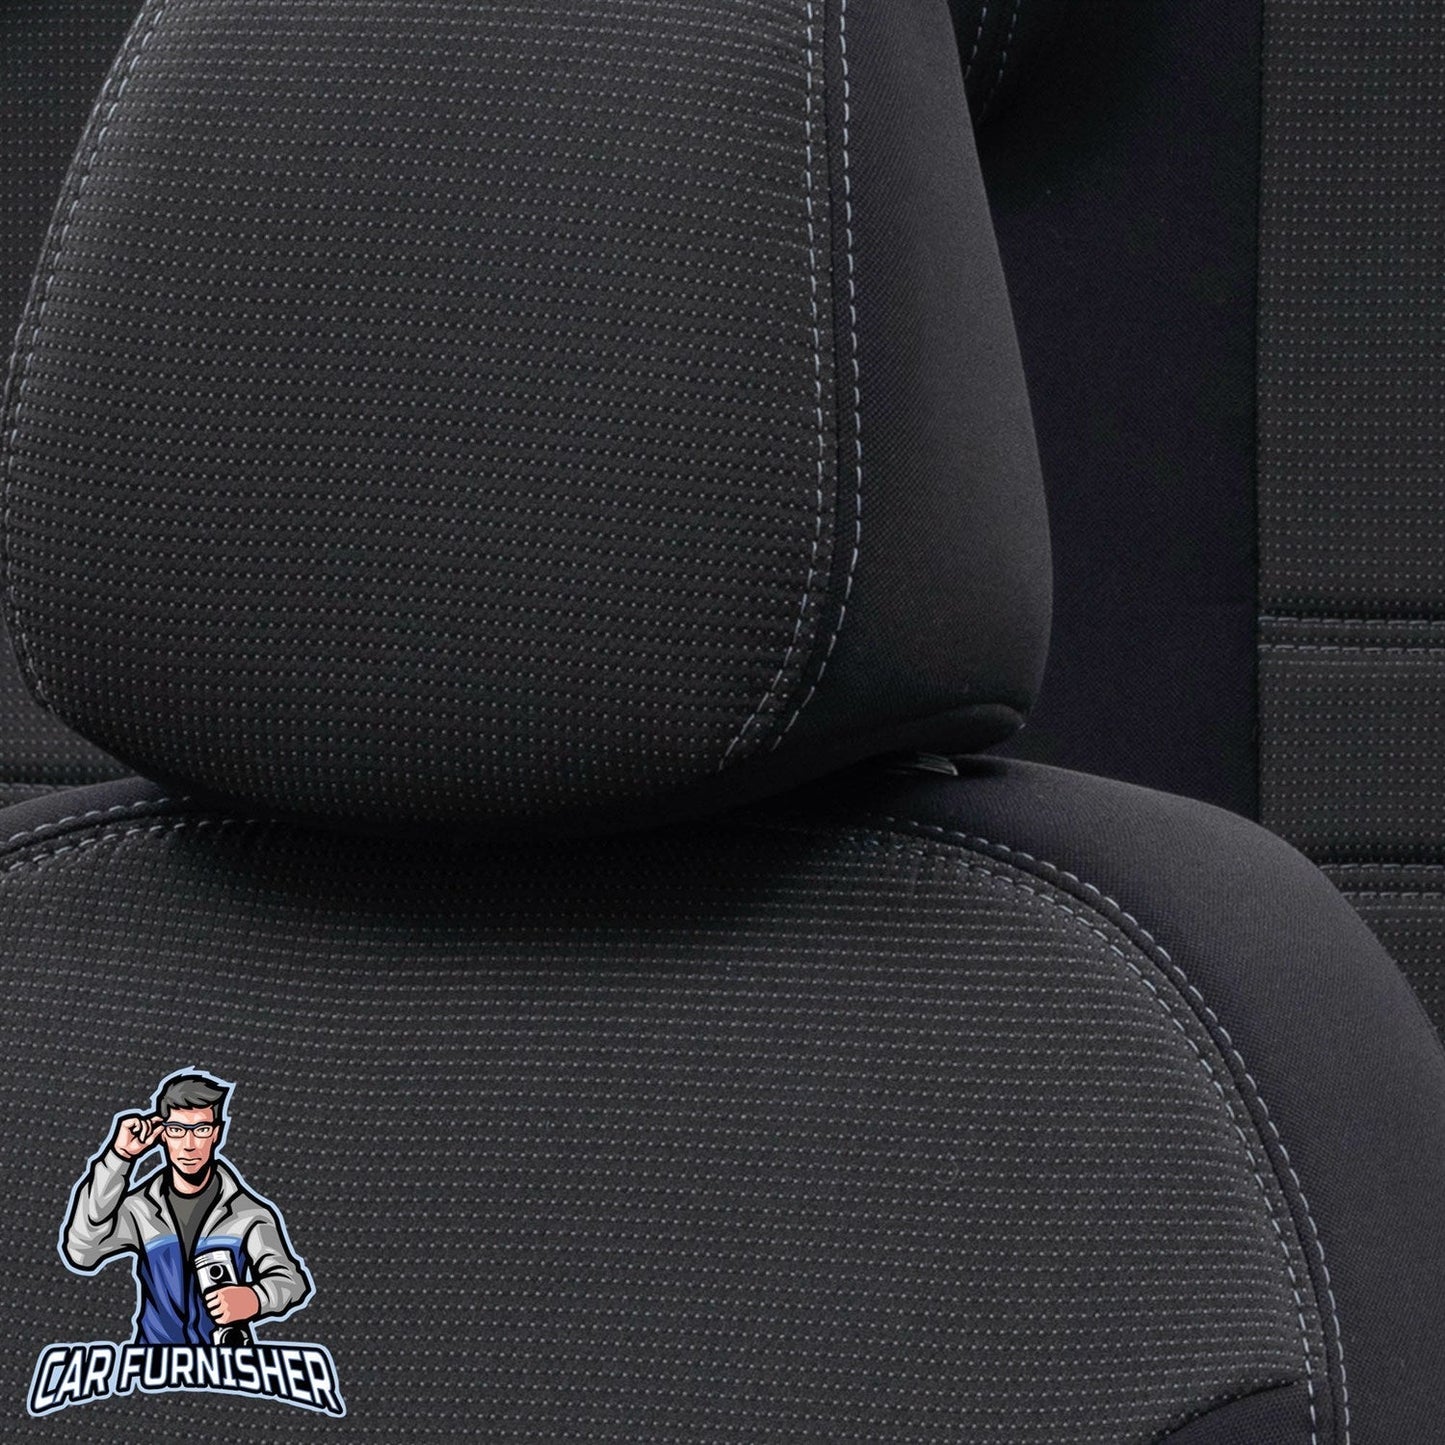 Citroen C-Elysee Seat Covers Original Jacquard Design Dark Gray Jacquard Fabric